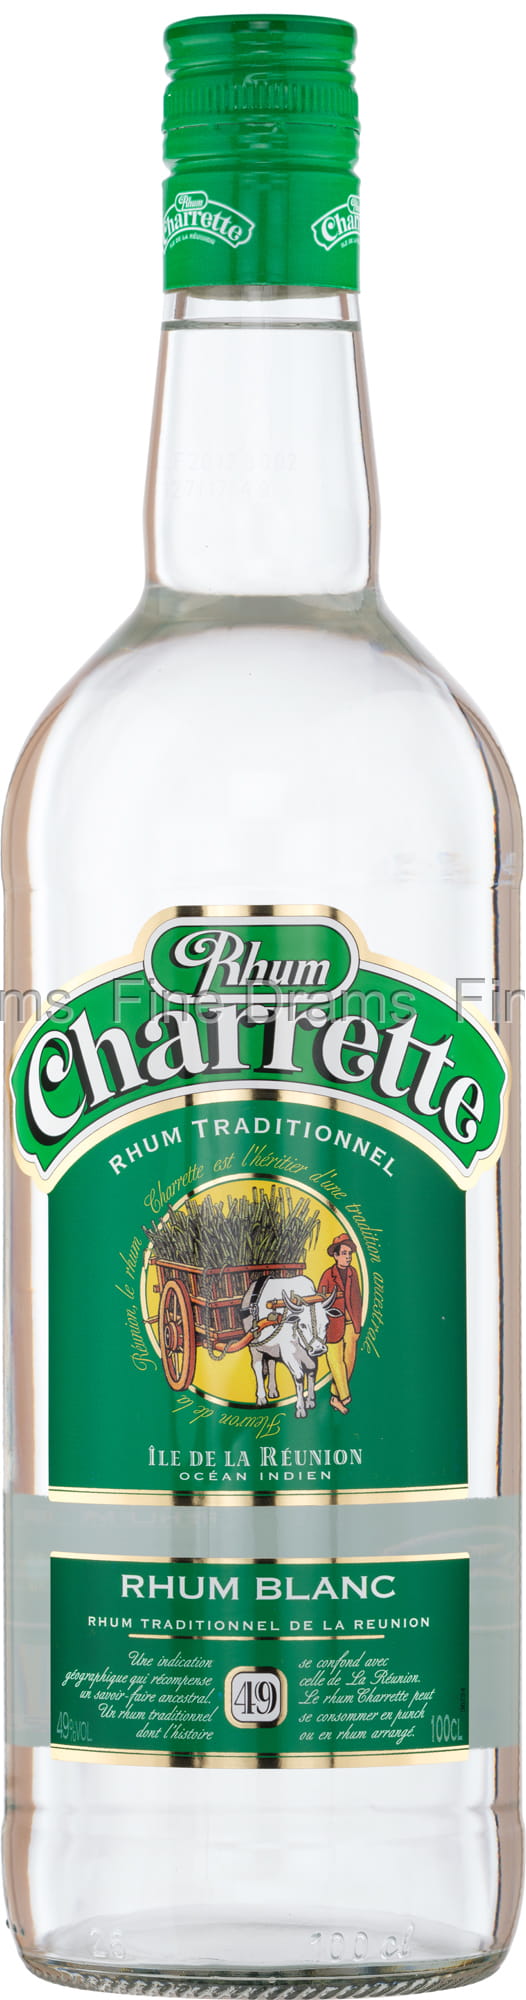 RHUM CHARRETTE BLANC 100CL 49° - Boissons du Monde